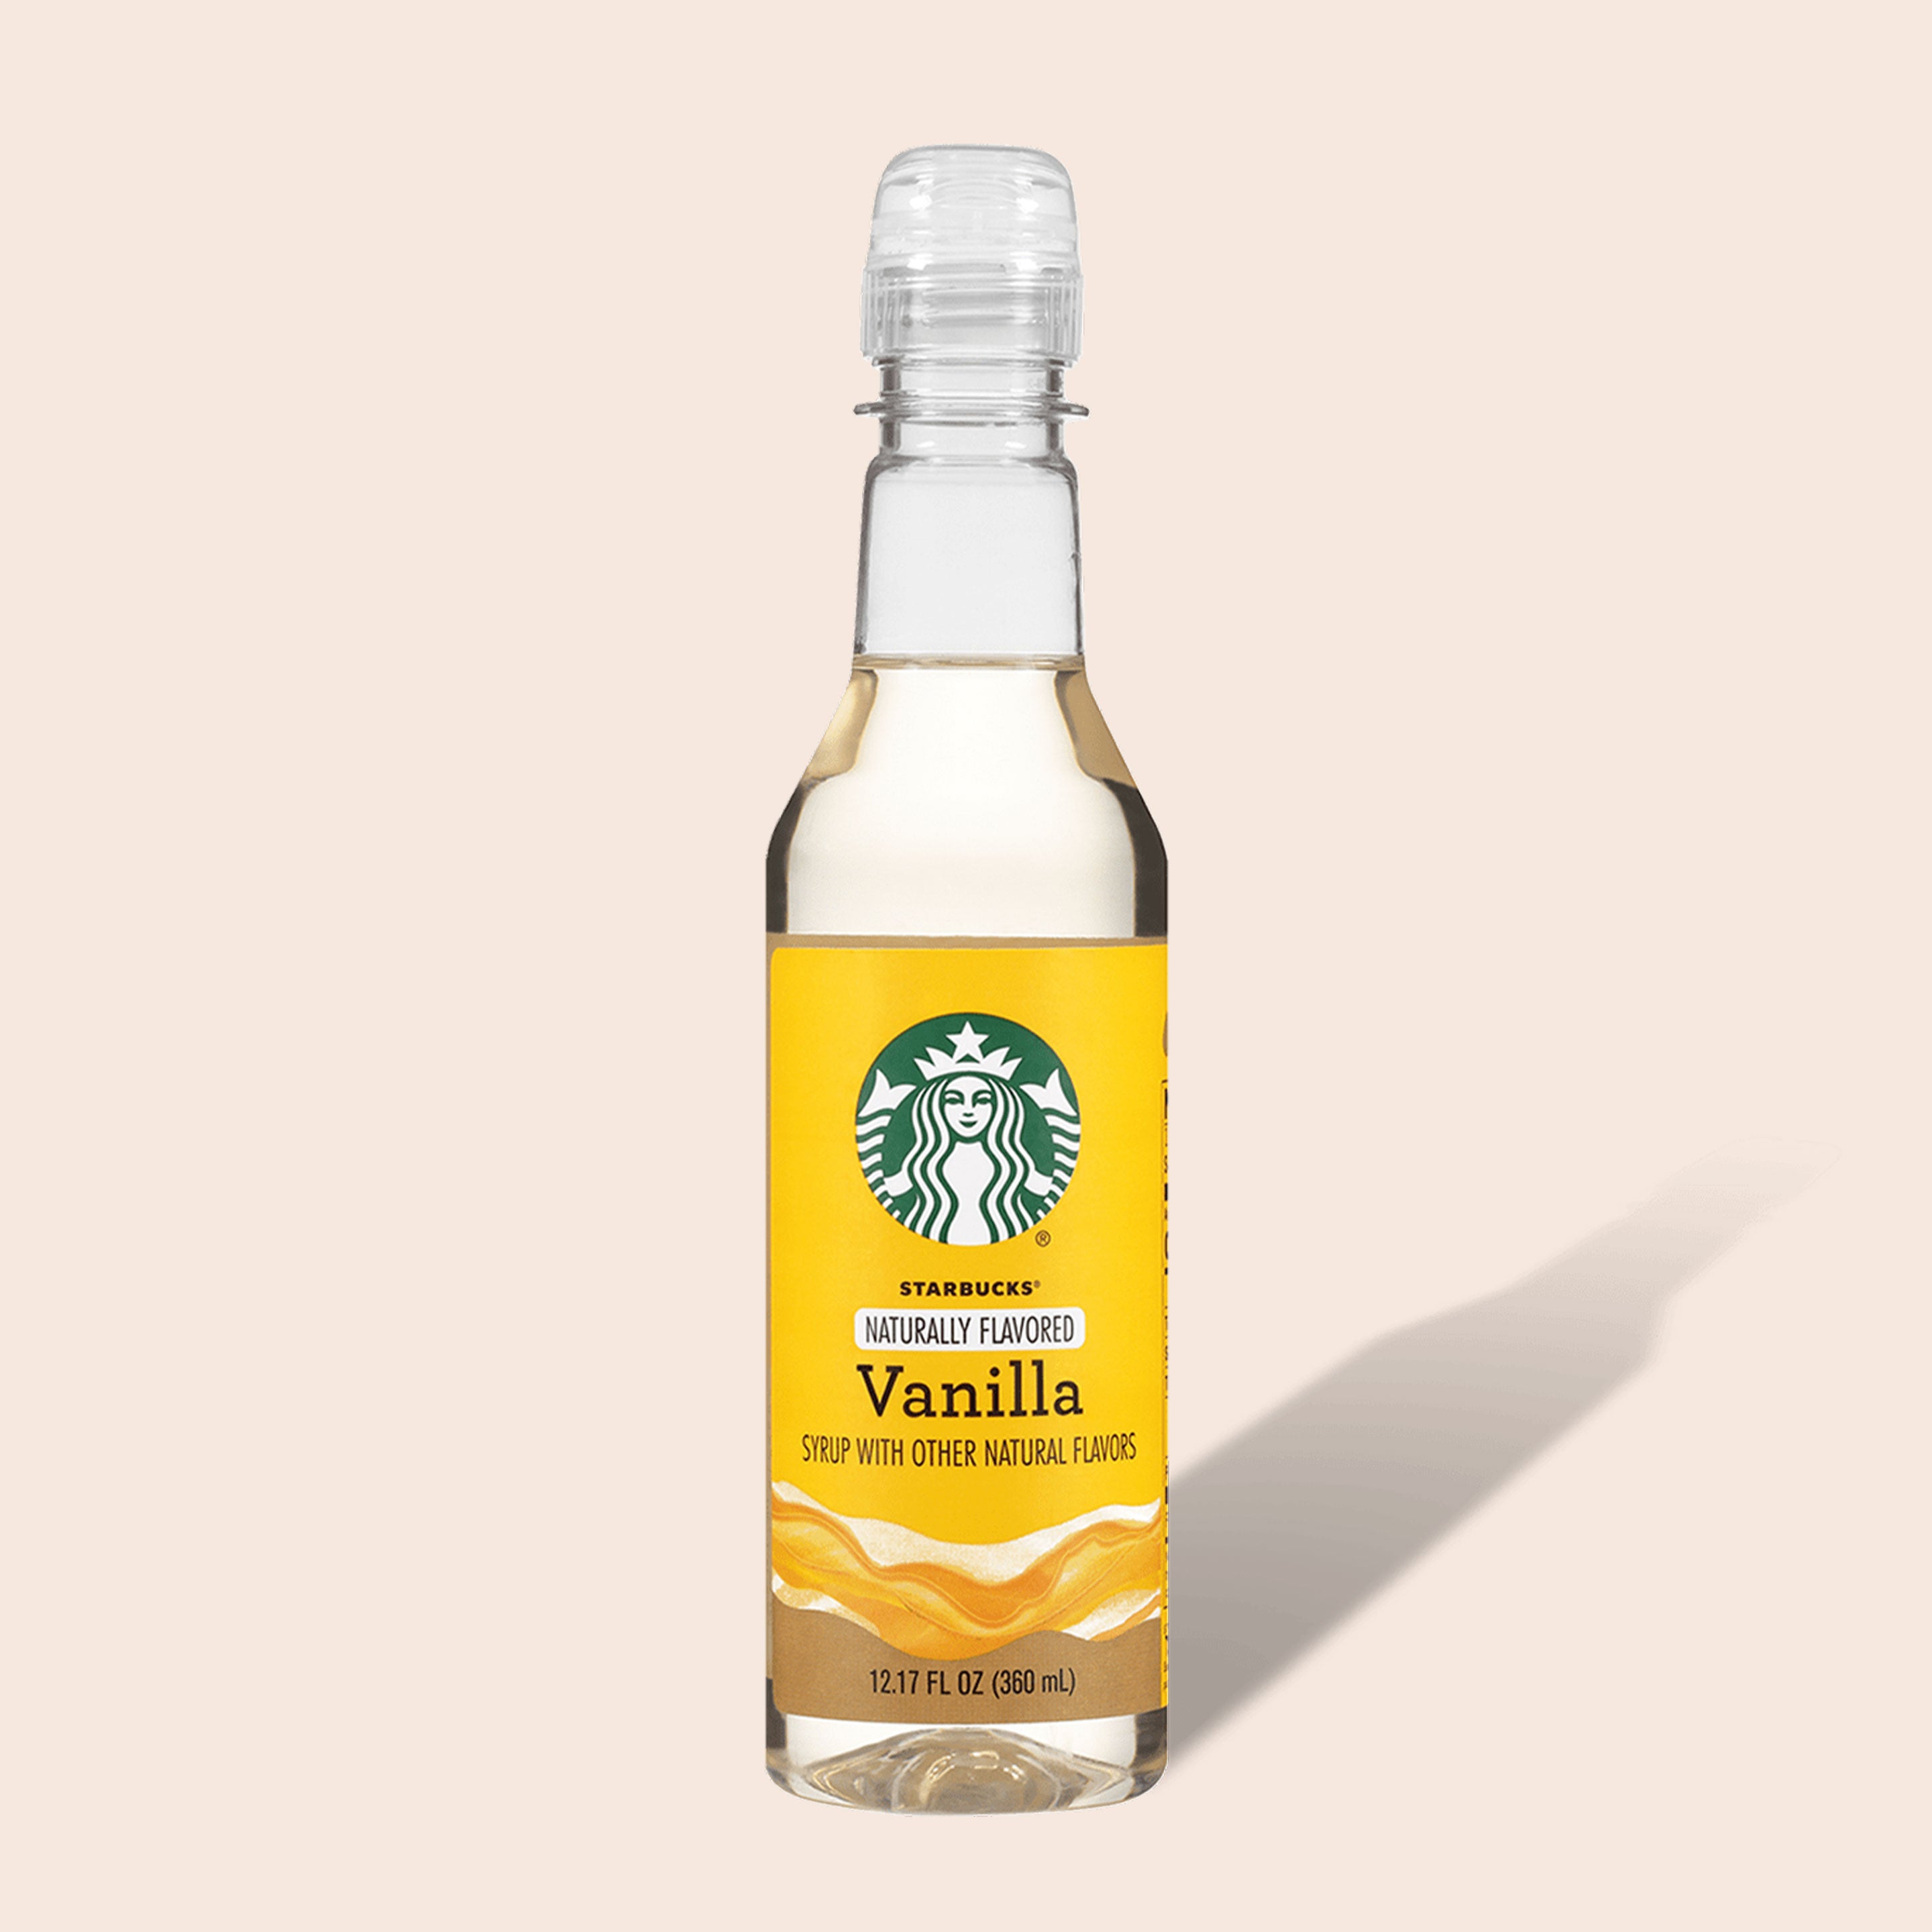 Starbucks Naturally Flavored Vanilla Syrup